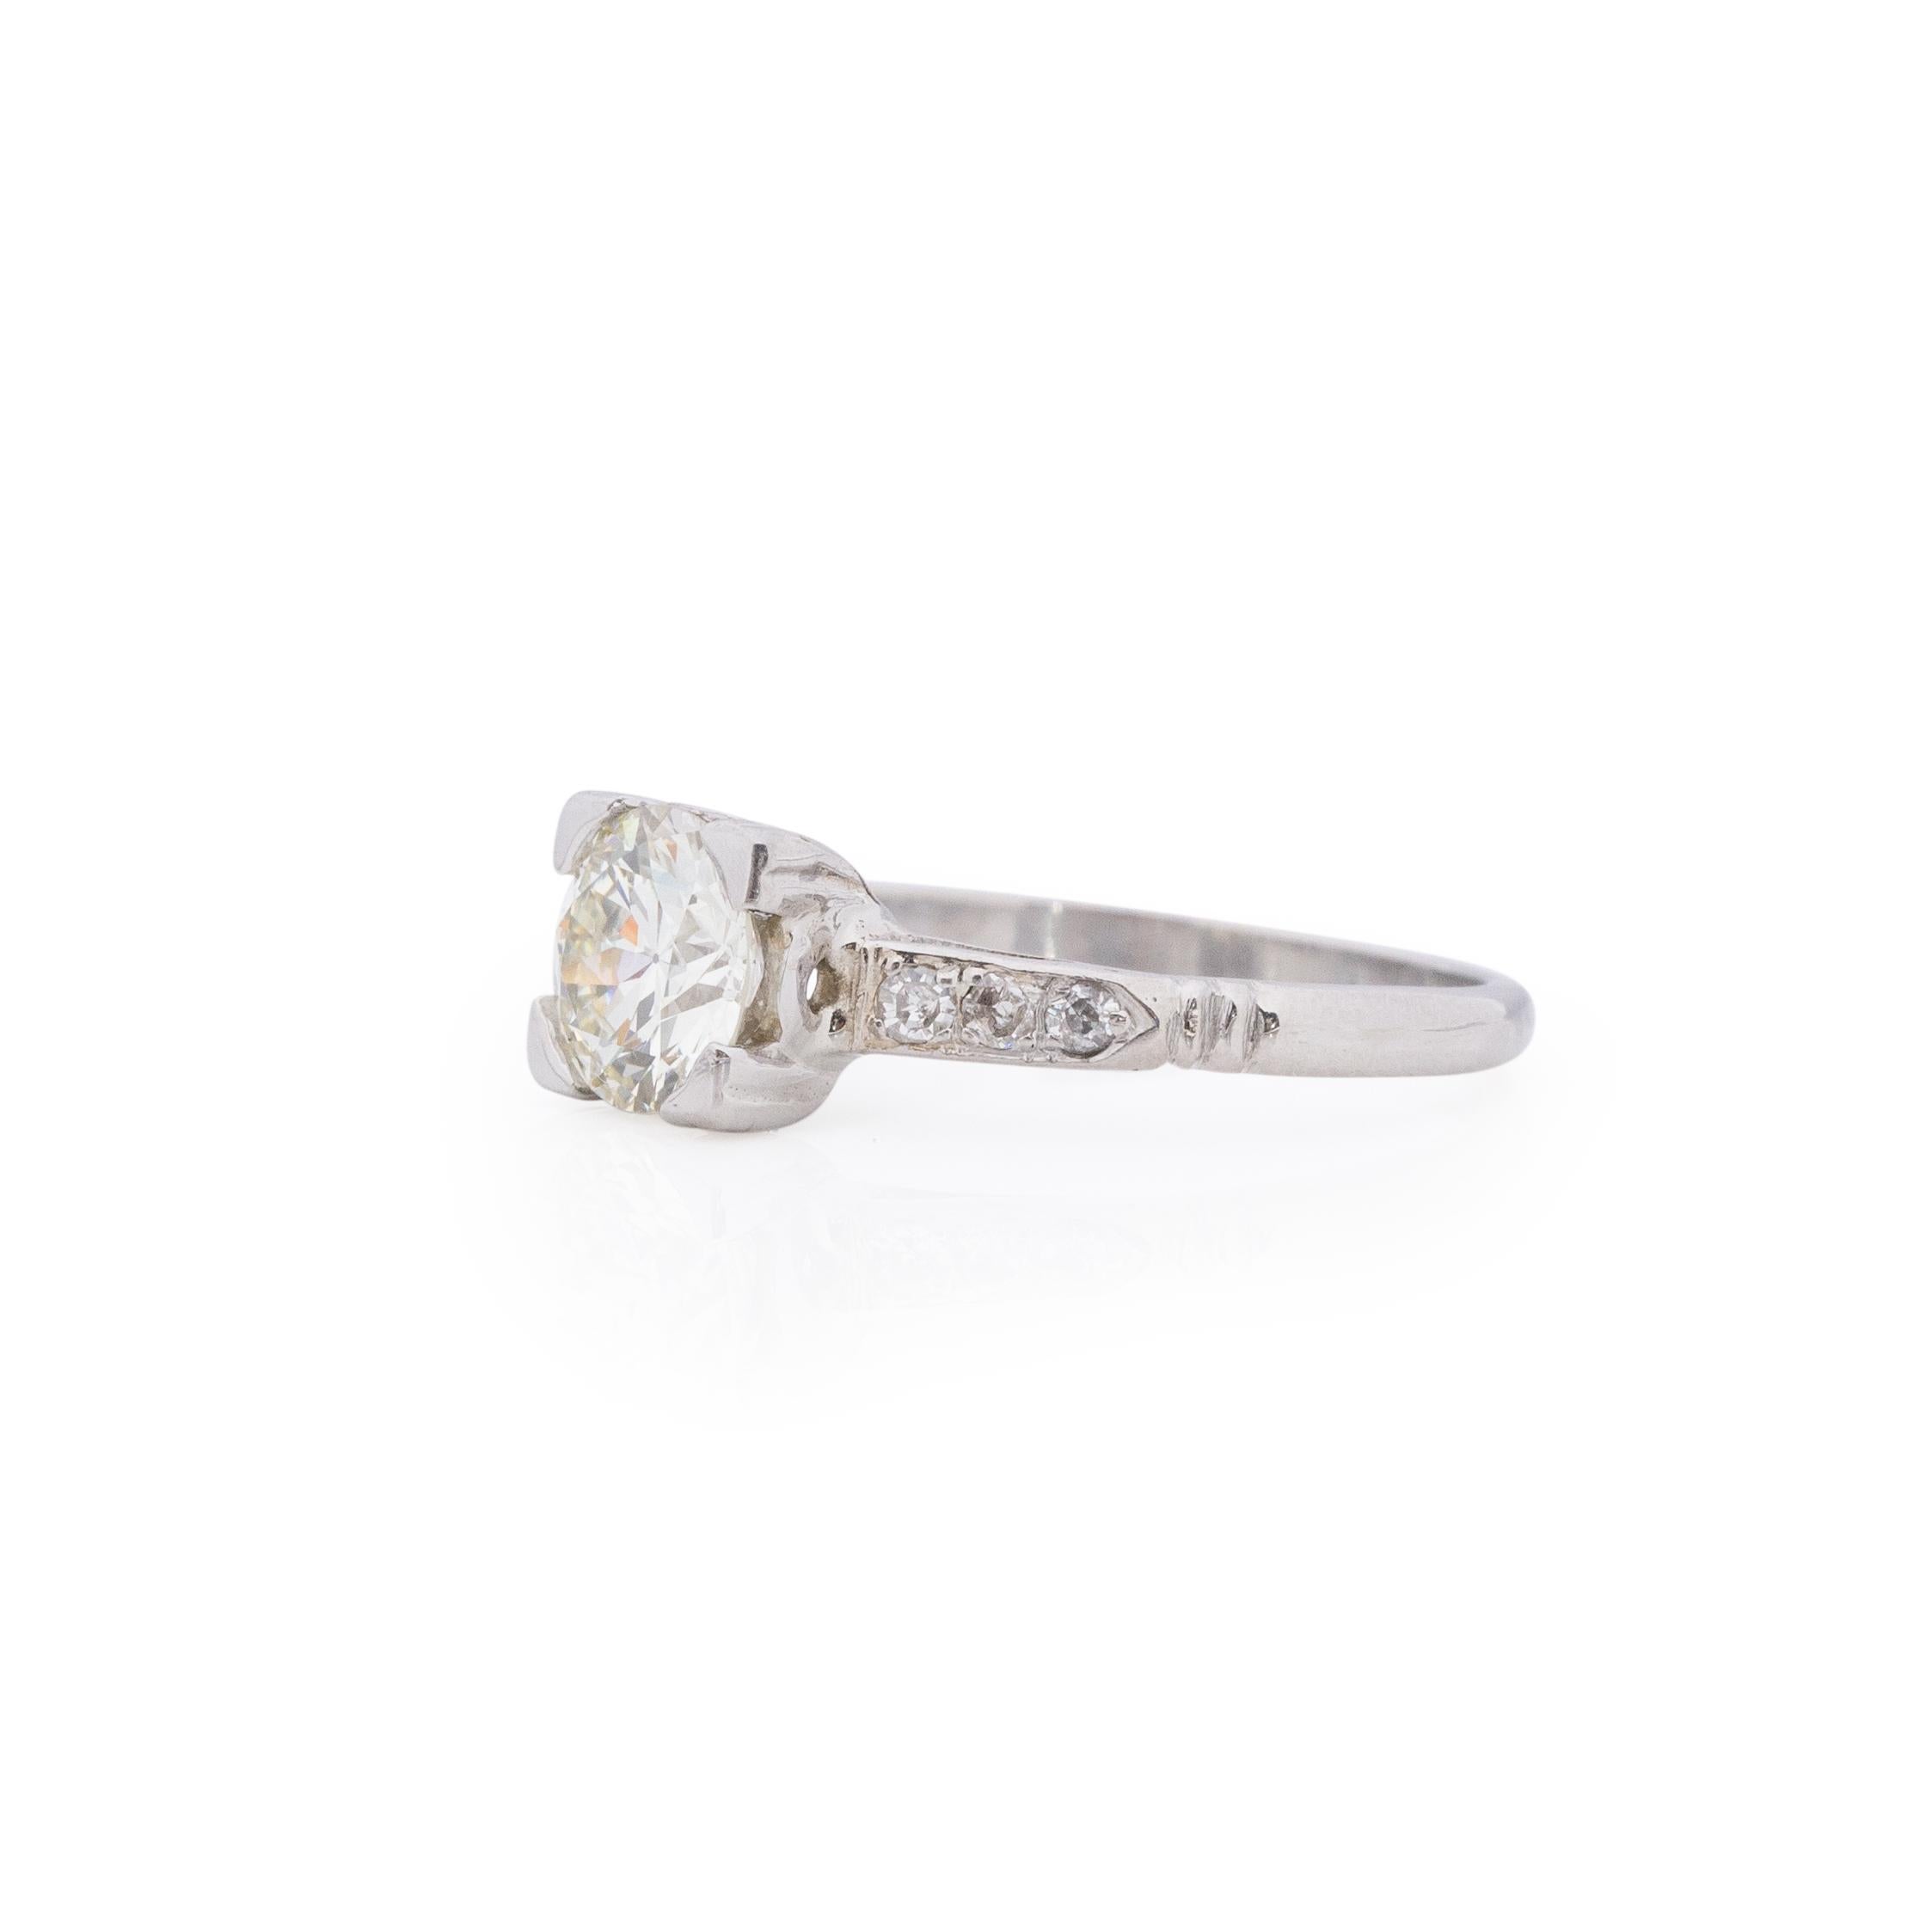 1.25 carat vintage art deco diamond engagement ring